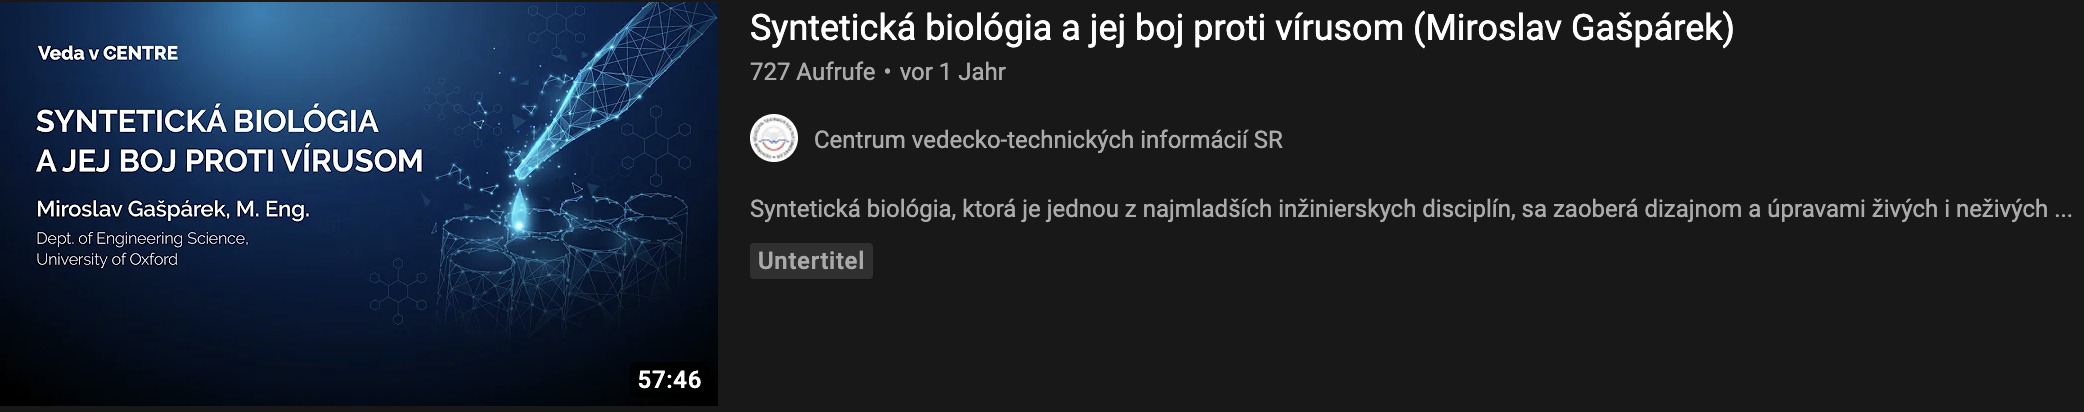 Miroslav Gasparek synteticka biologia YouTube